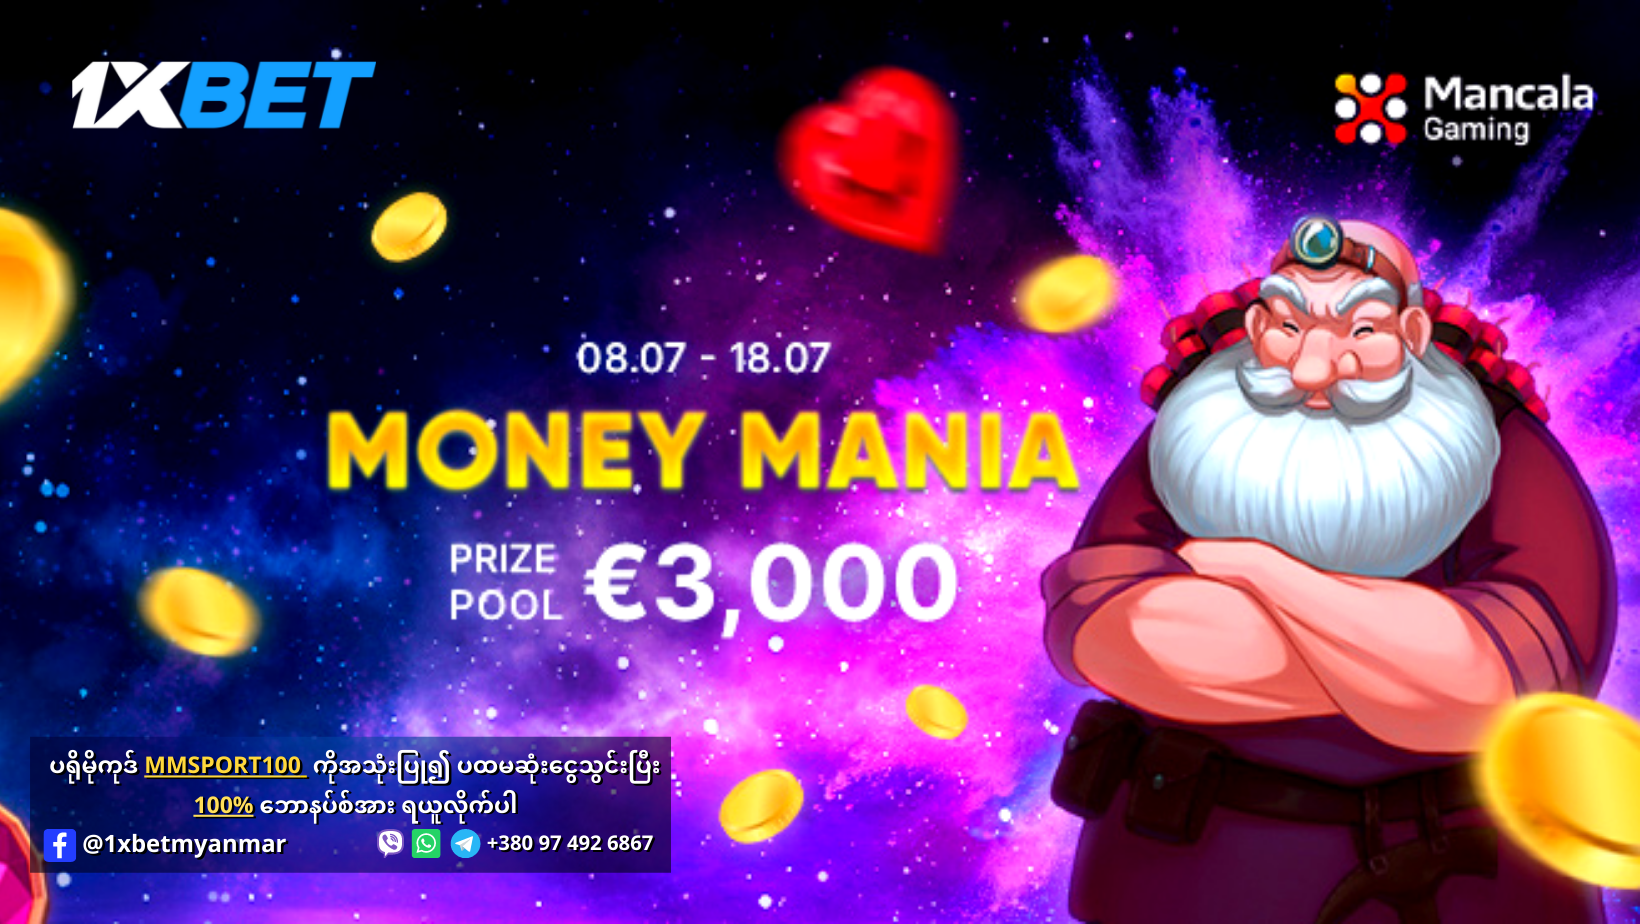 Money Mania promotion 1xBet